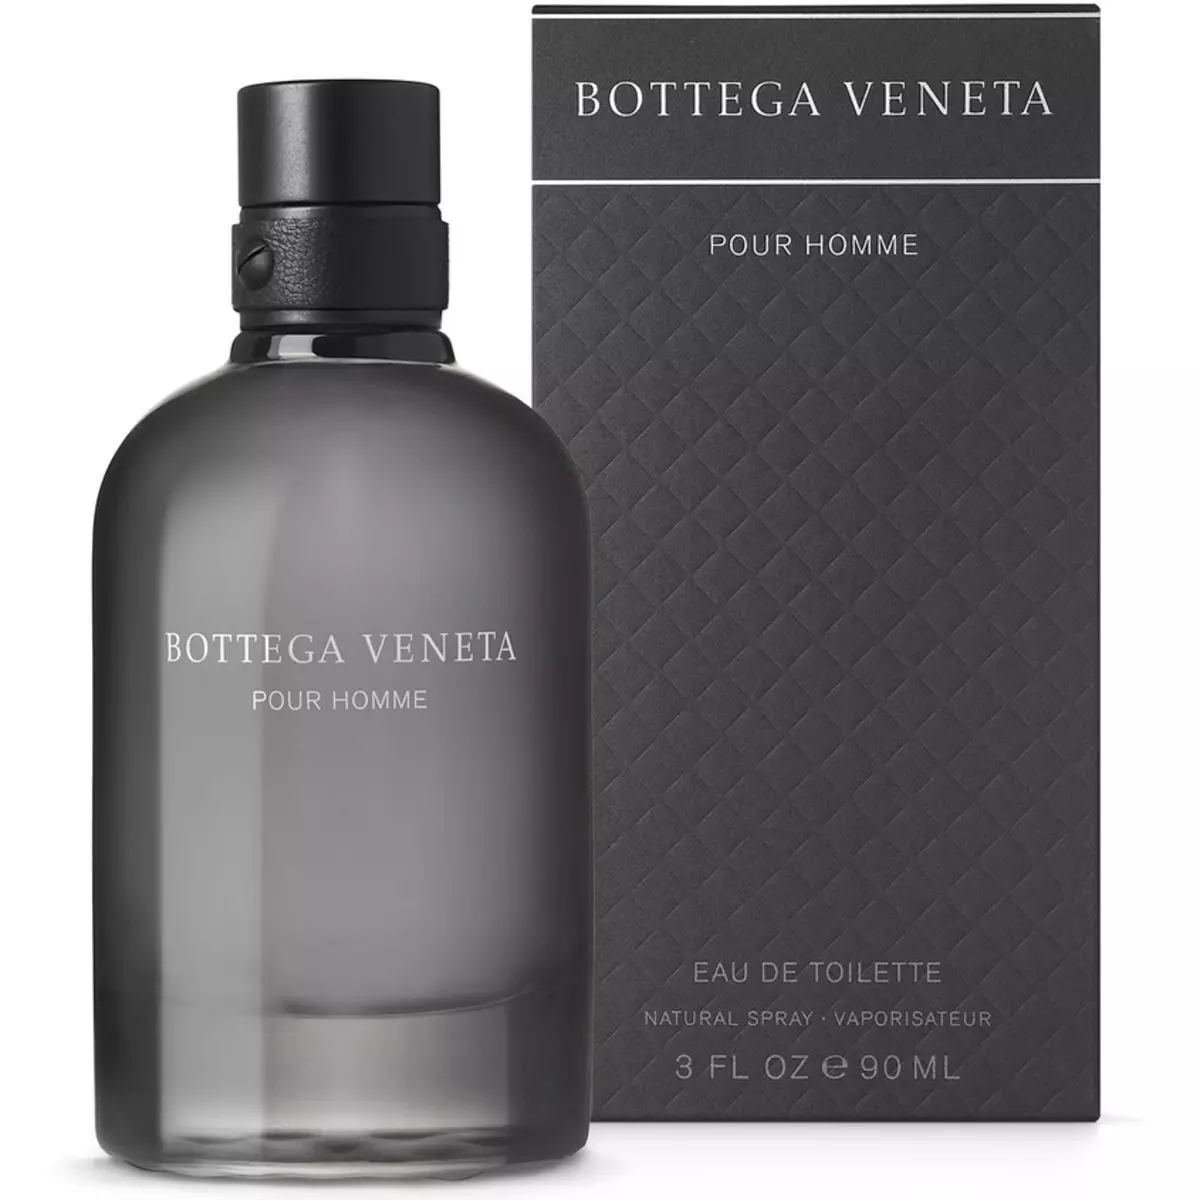 Bottega Veneta Parfum: parfumuri pentru femei si barbati, nod, iluzie si alte apa dressing, recenzii despre parfumuri 25257_15